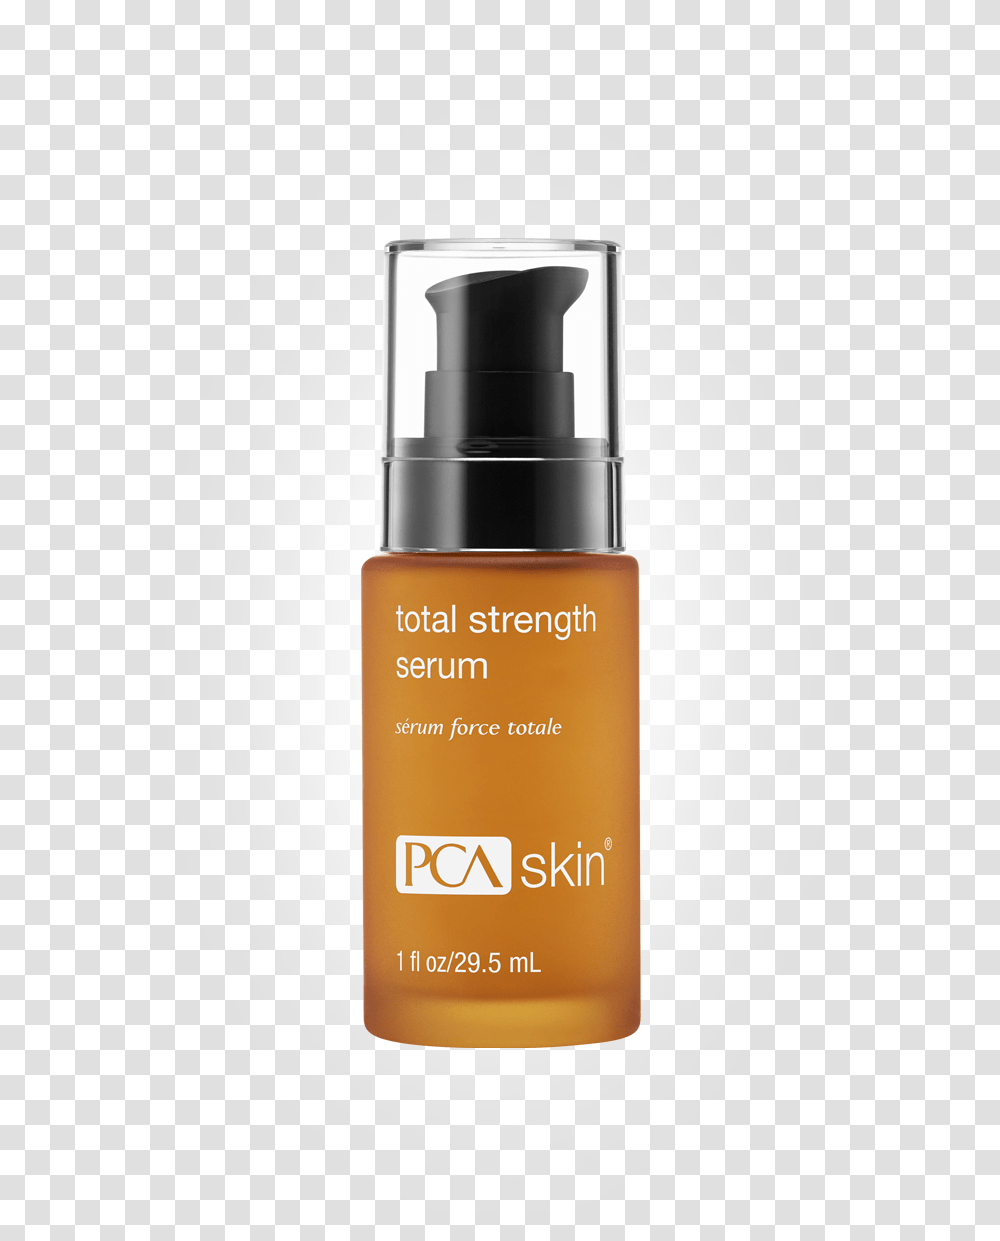 Total Strength Serum Pca Skin Pigment Gel, Label, Bottle, Shaker Transparent Png